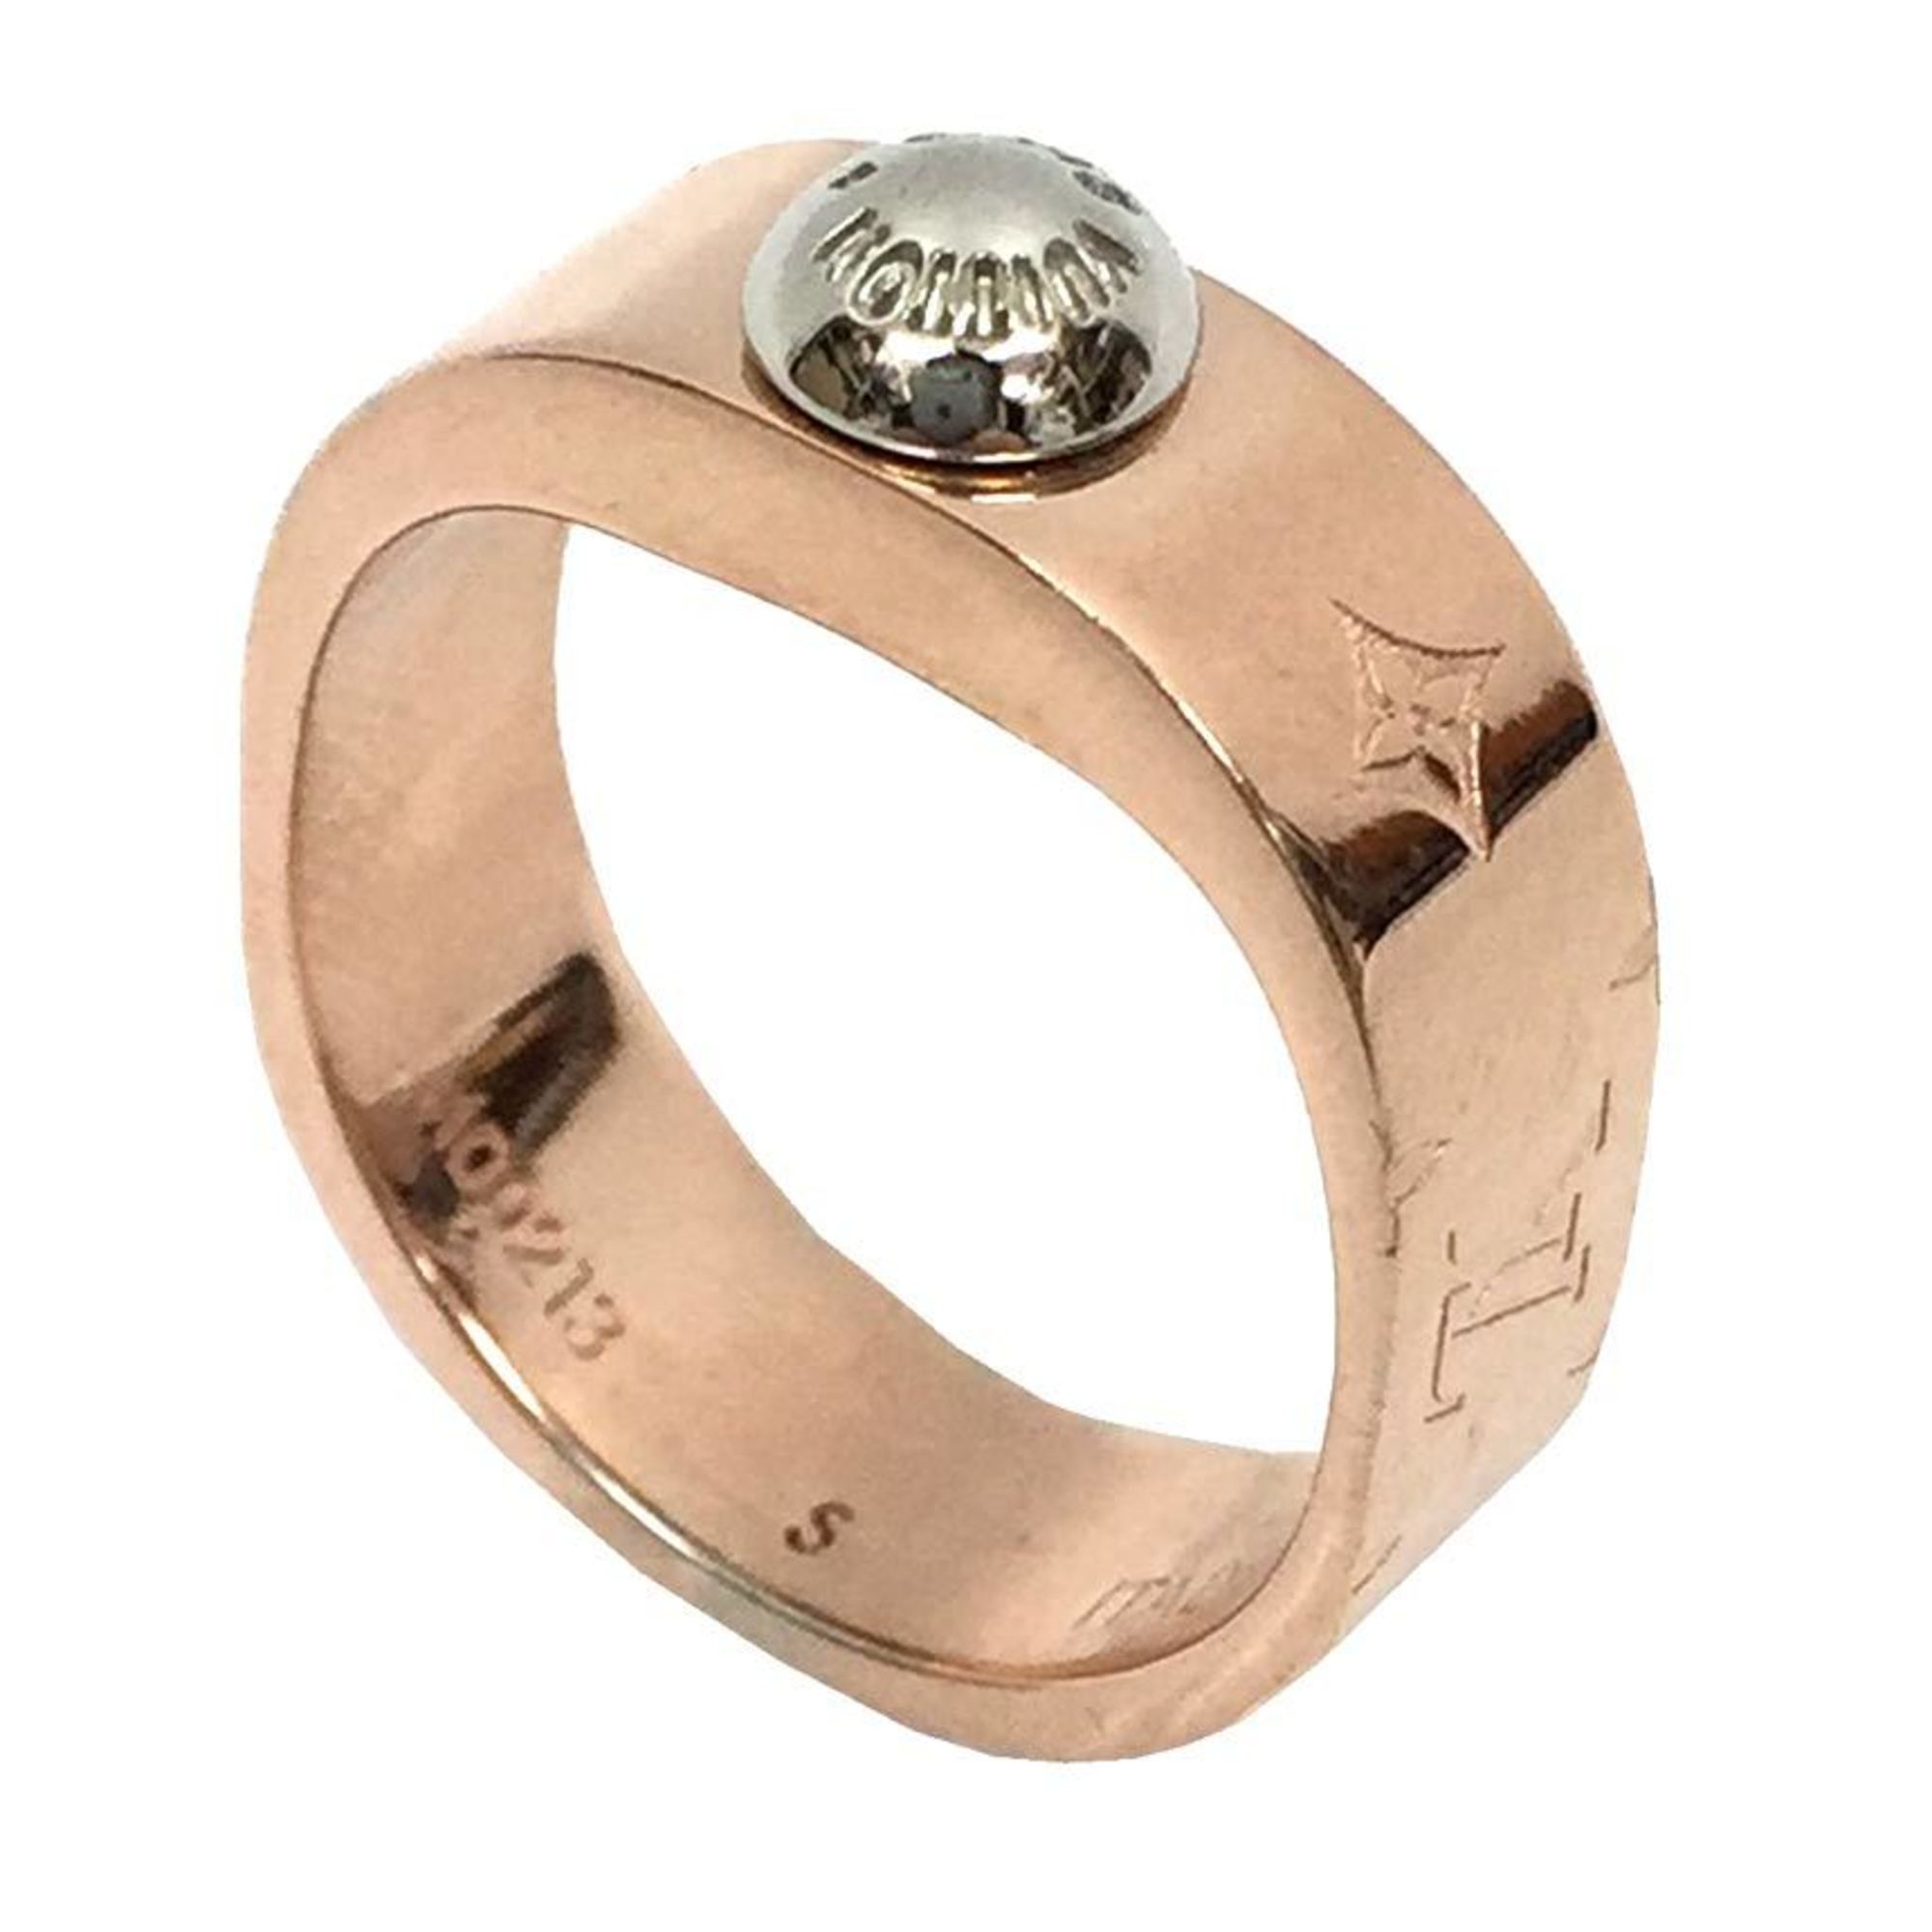 Louis Vuitton ring nanogram M00213 S size about 10 pink gold x silver